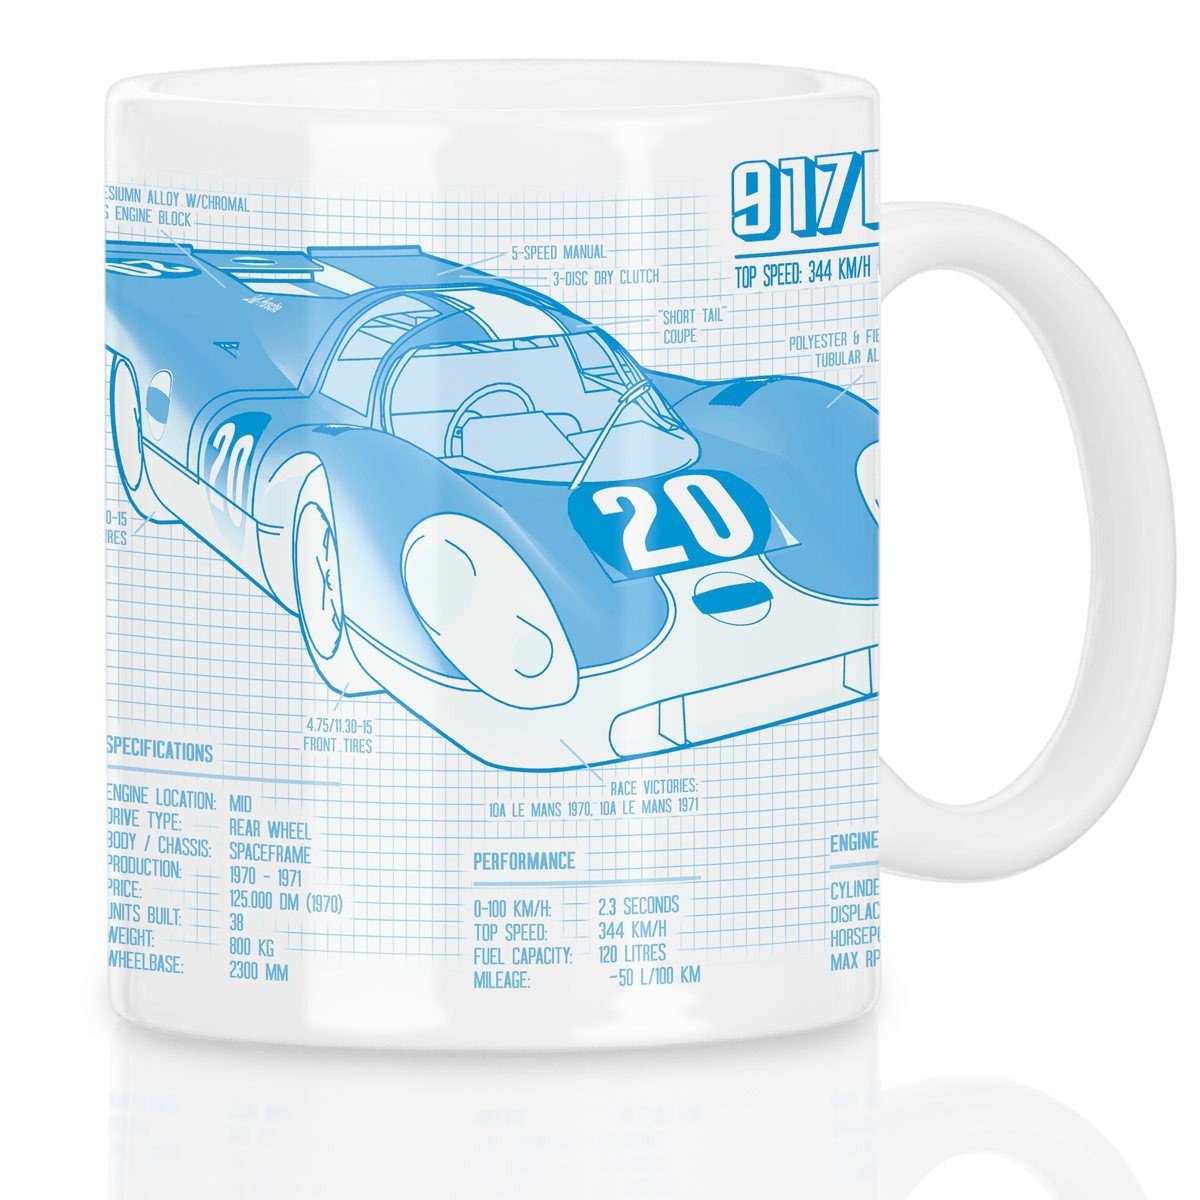 style3 Tasse, Keramik, 917K Blaupause Kaffeebecher Tasse le mans 911 917 steve mcqueen 24 stunden rennen 24h 918